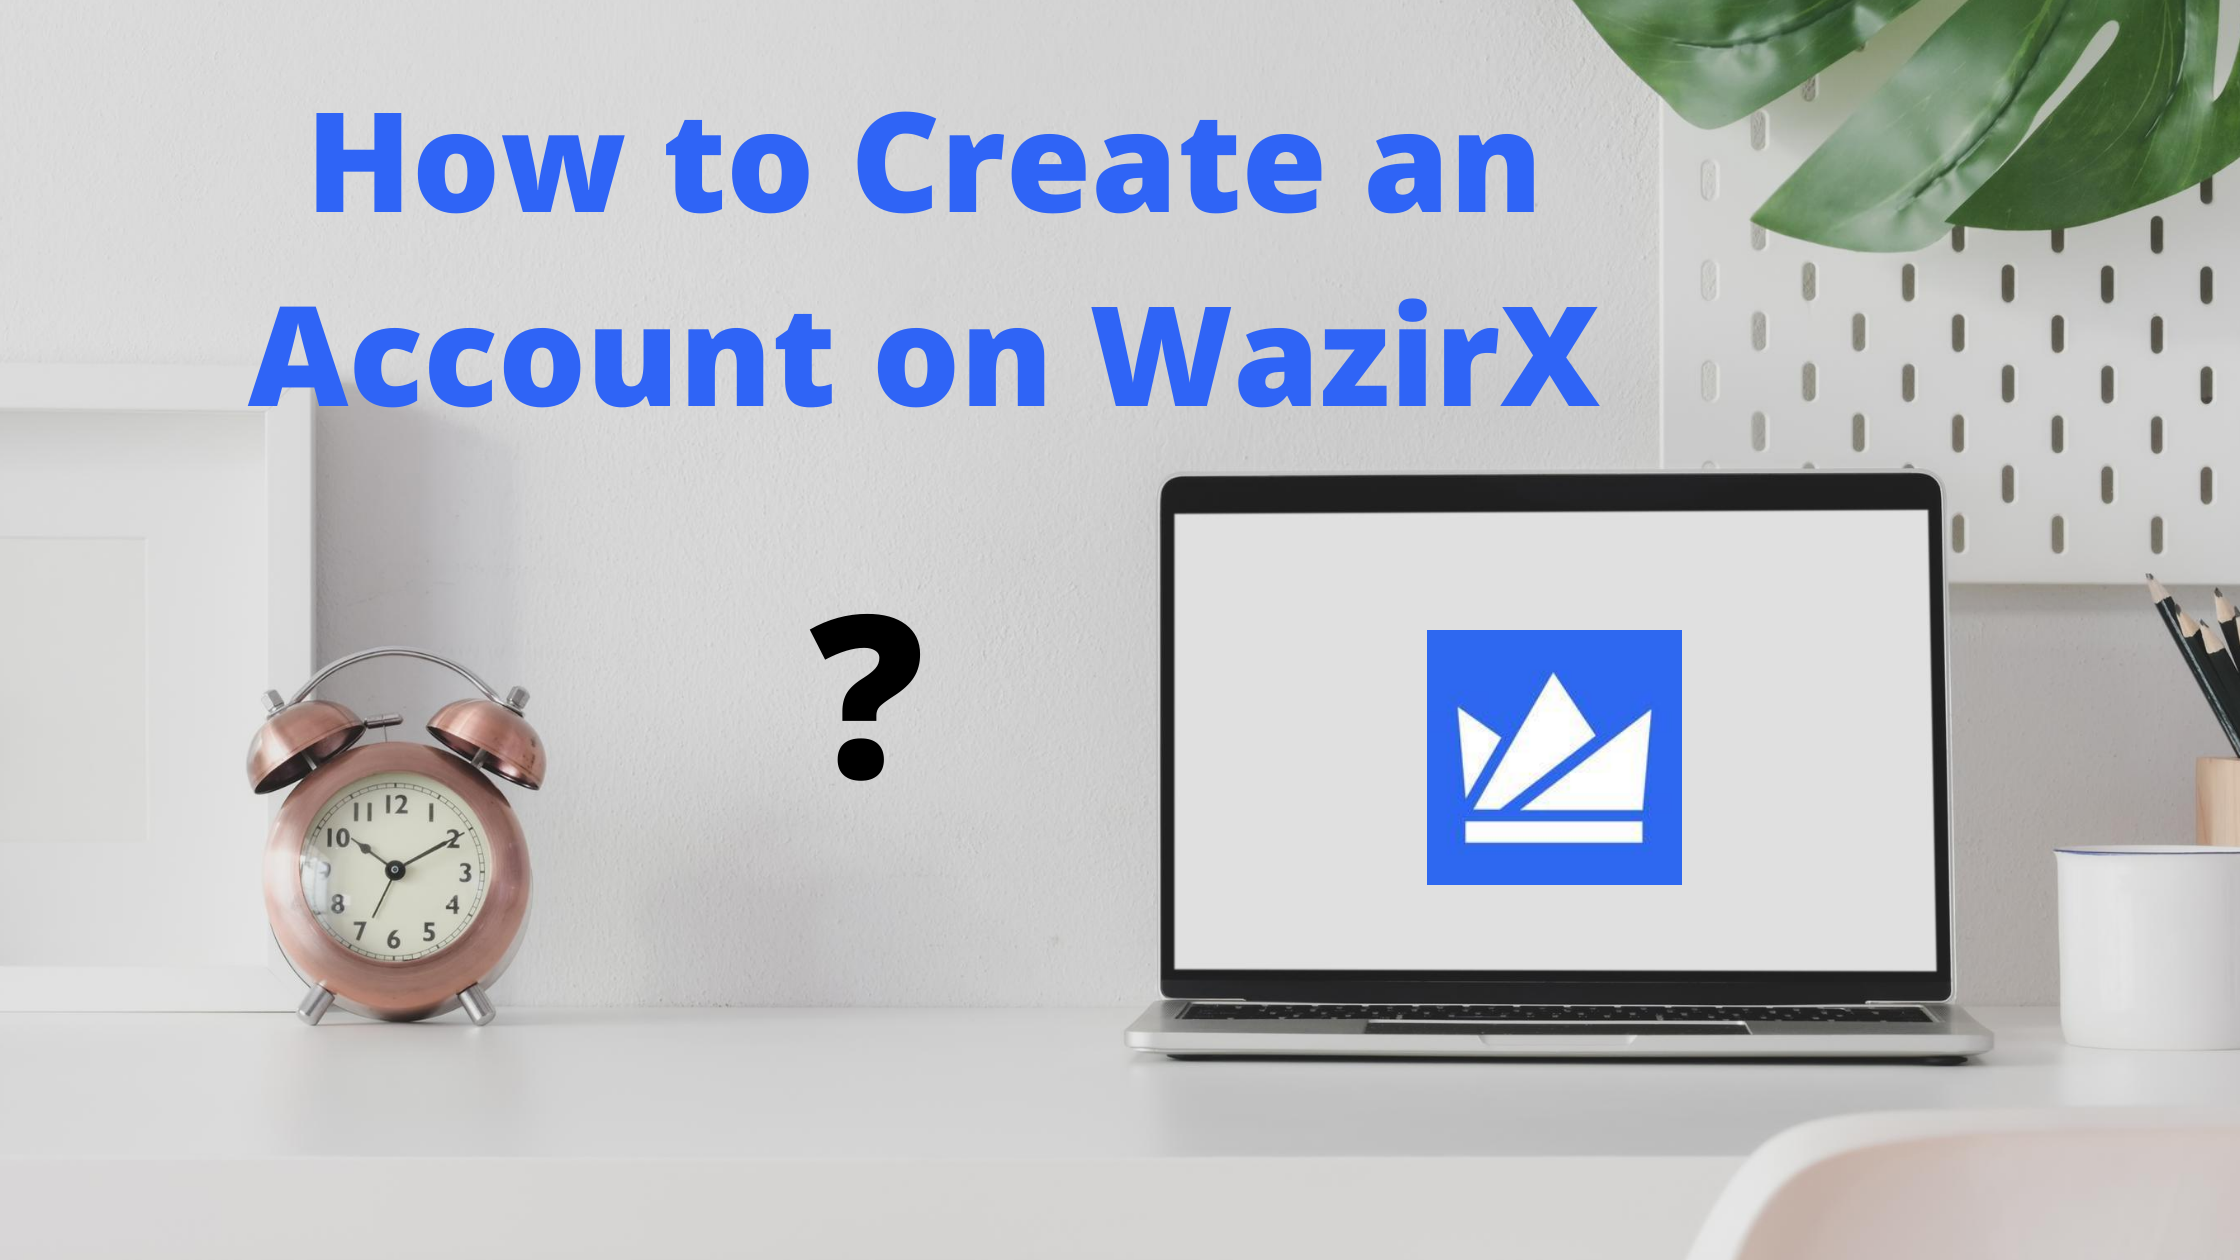 Create an Account on WazirX